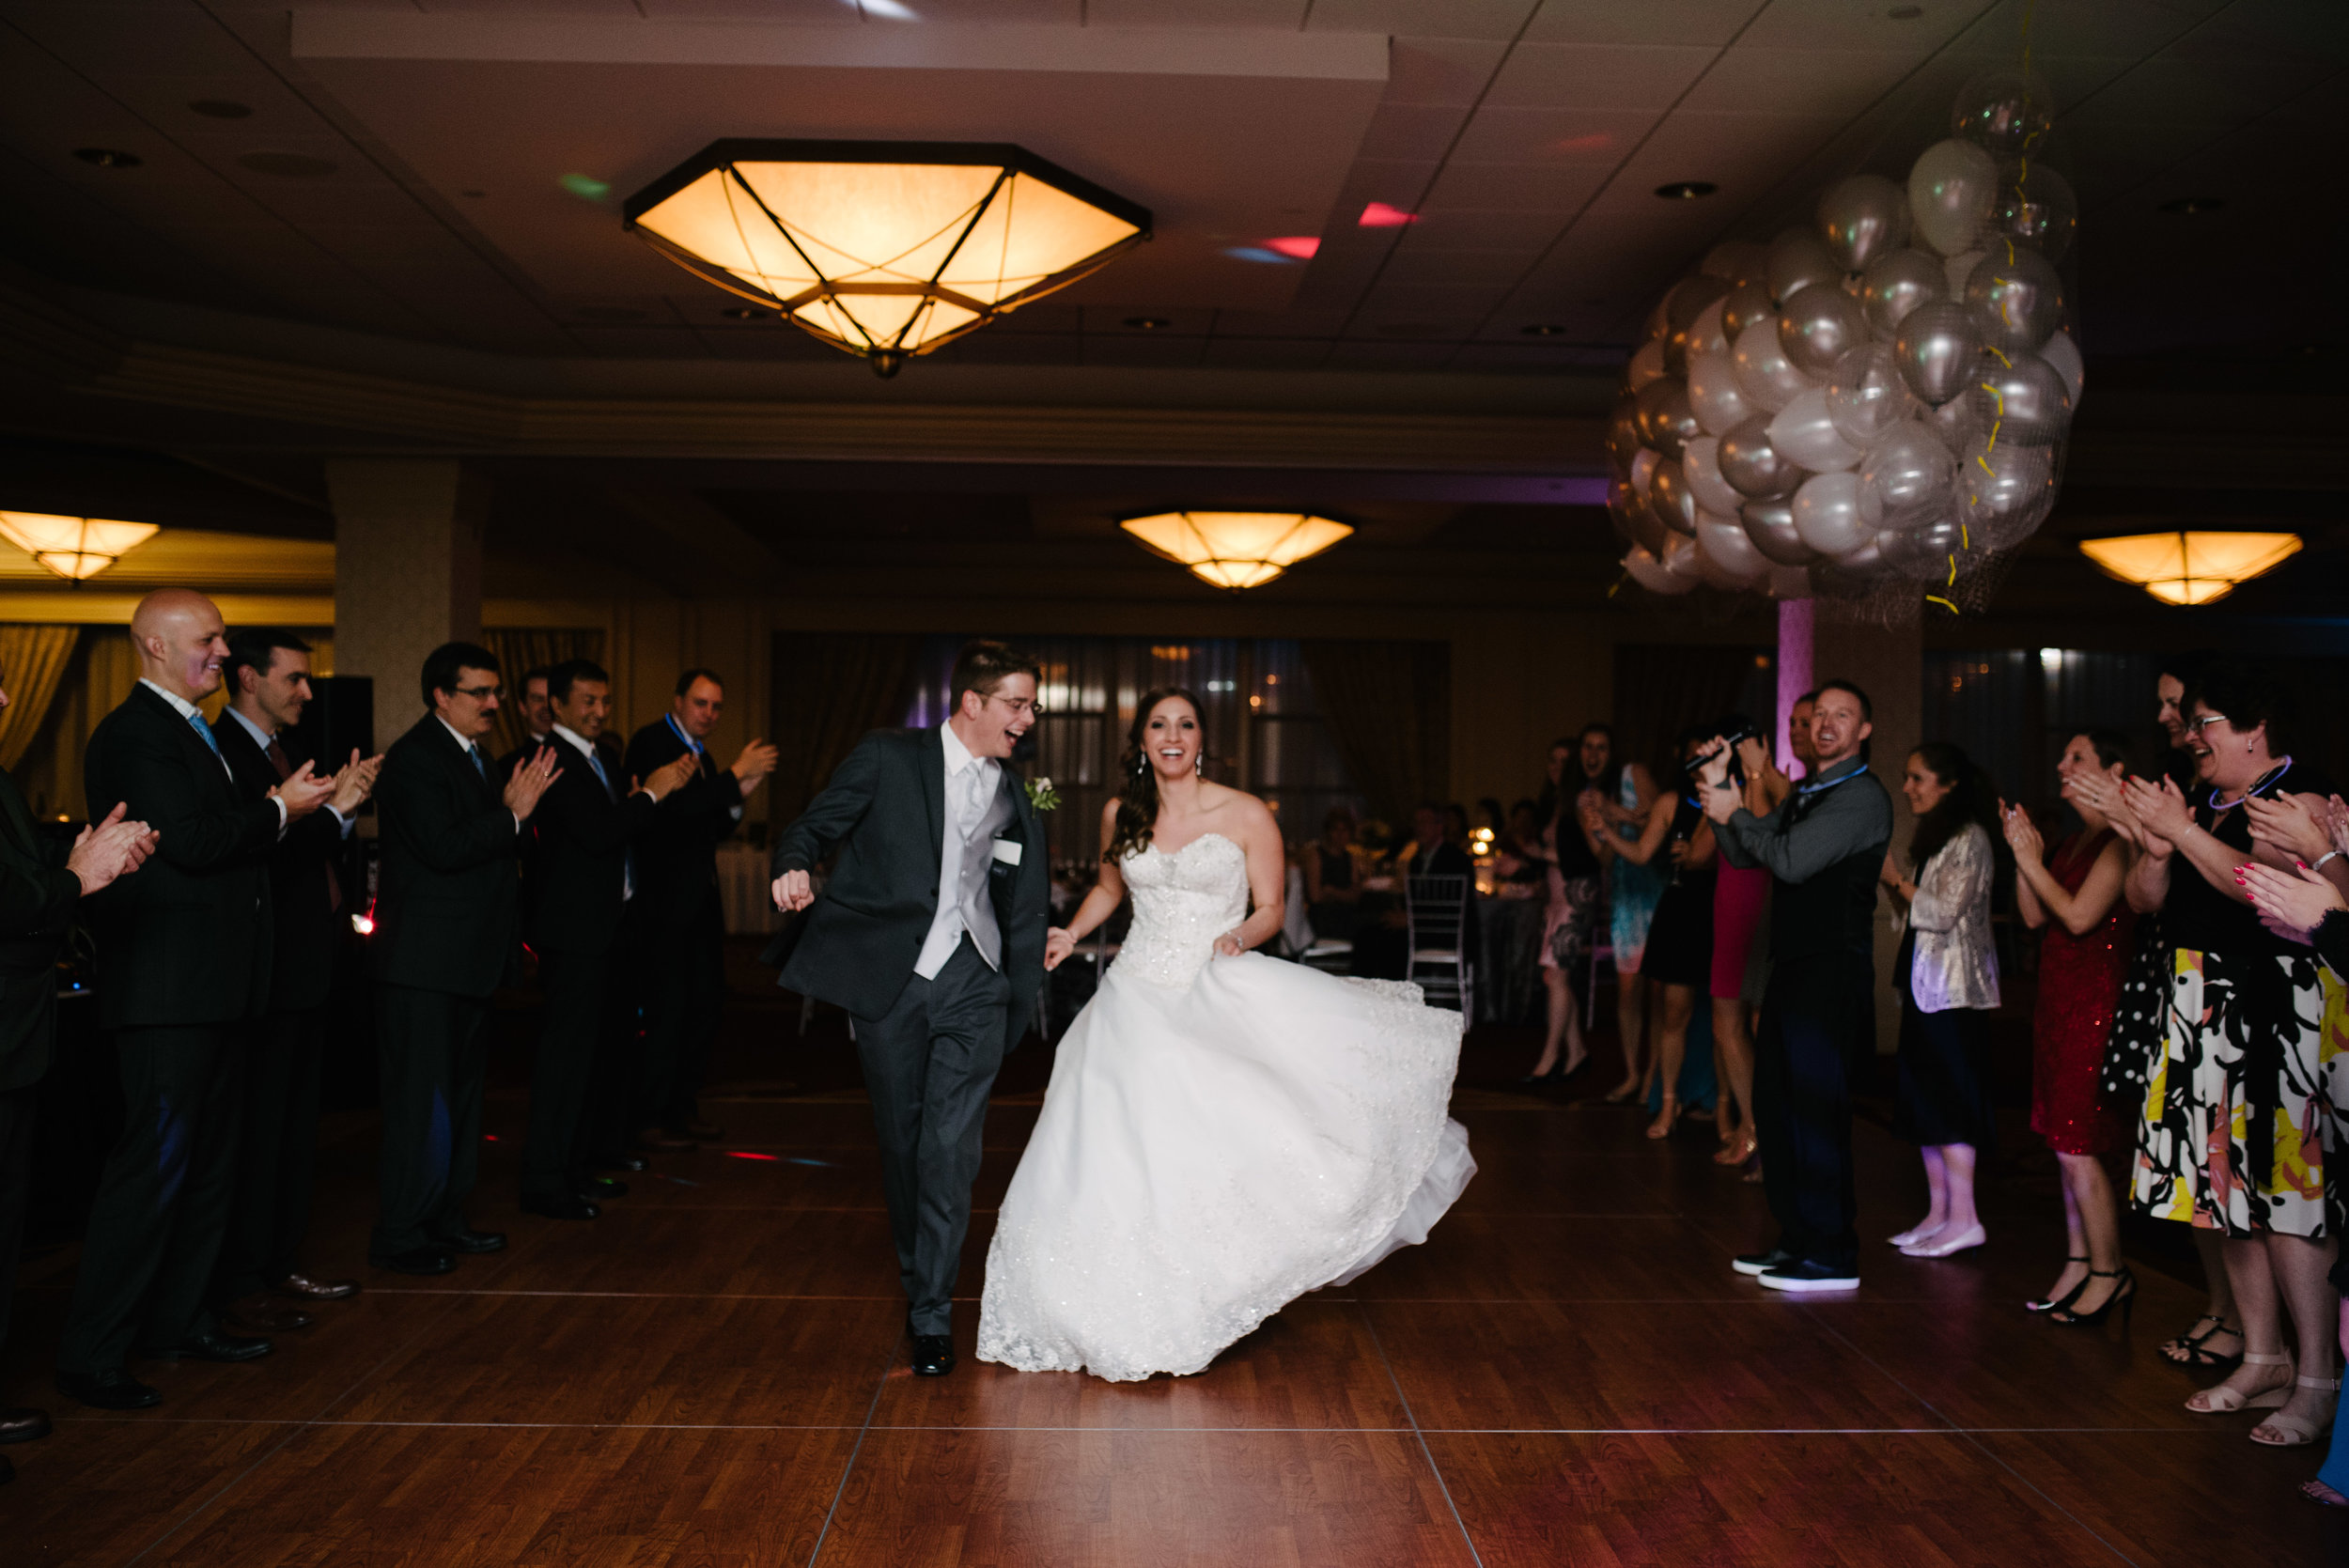 First dance ballroom reception // The Miner Details weddings